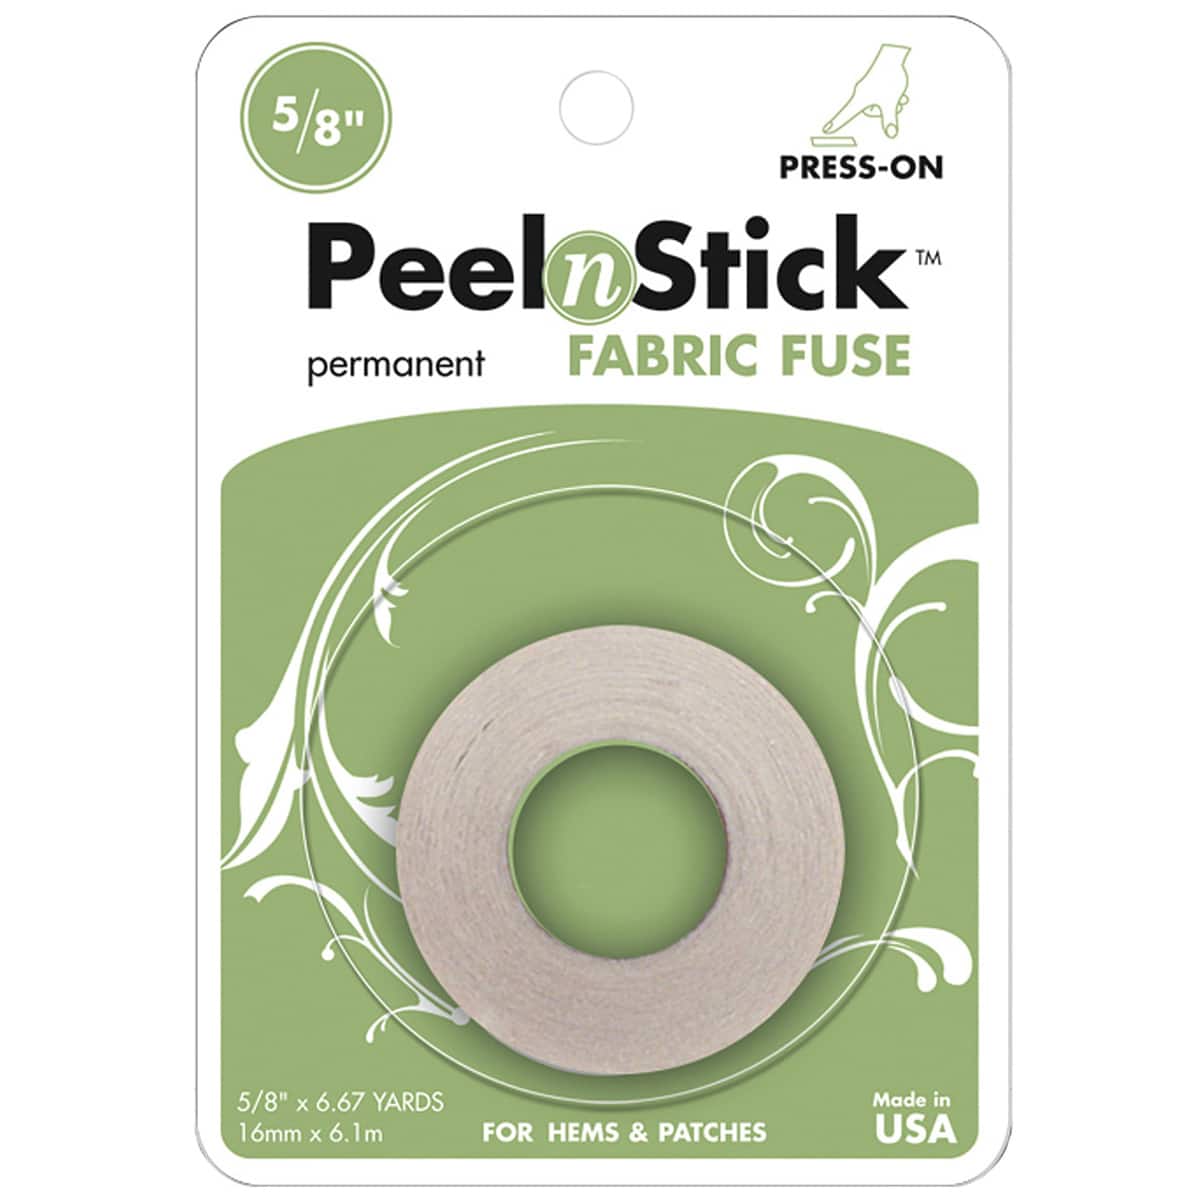 MJTrends: Peel-n-Stick Fabric Fuse